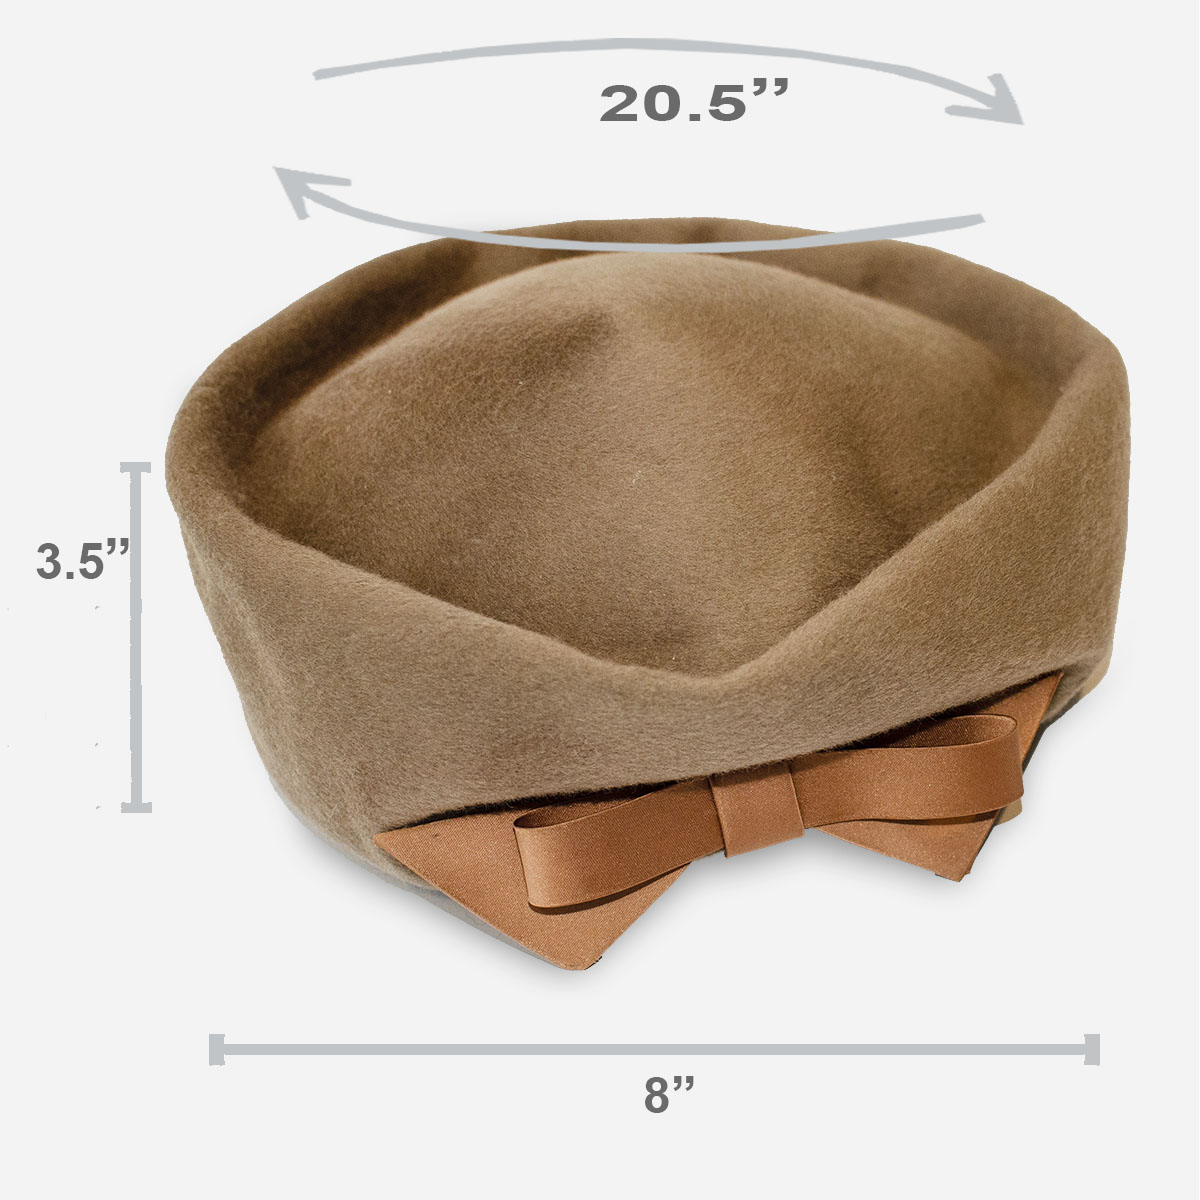 hat size information